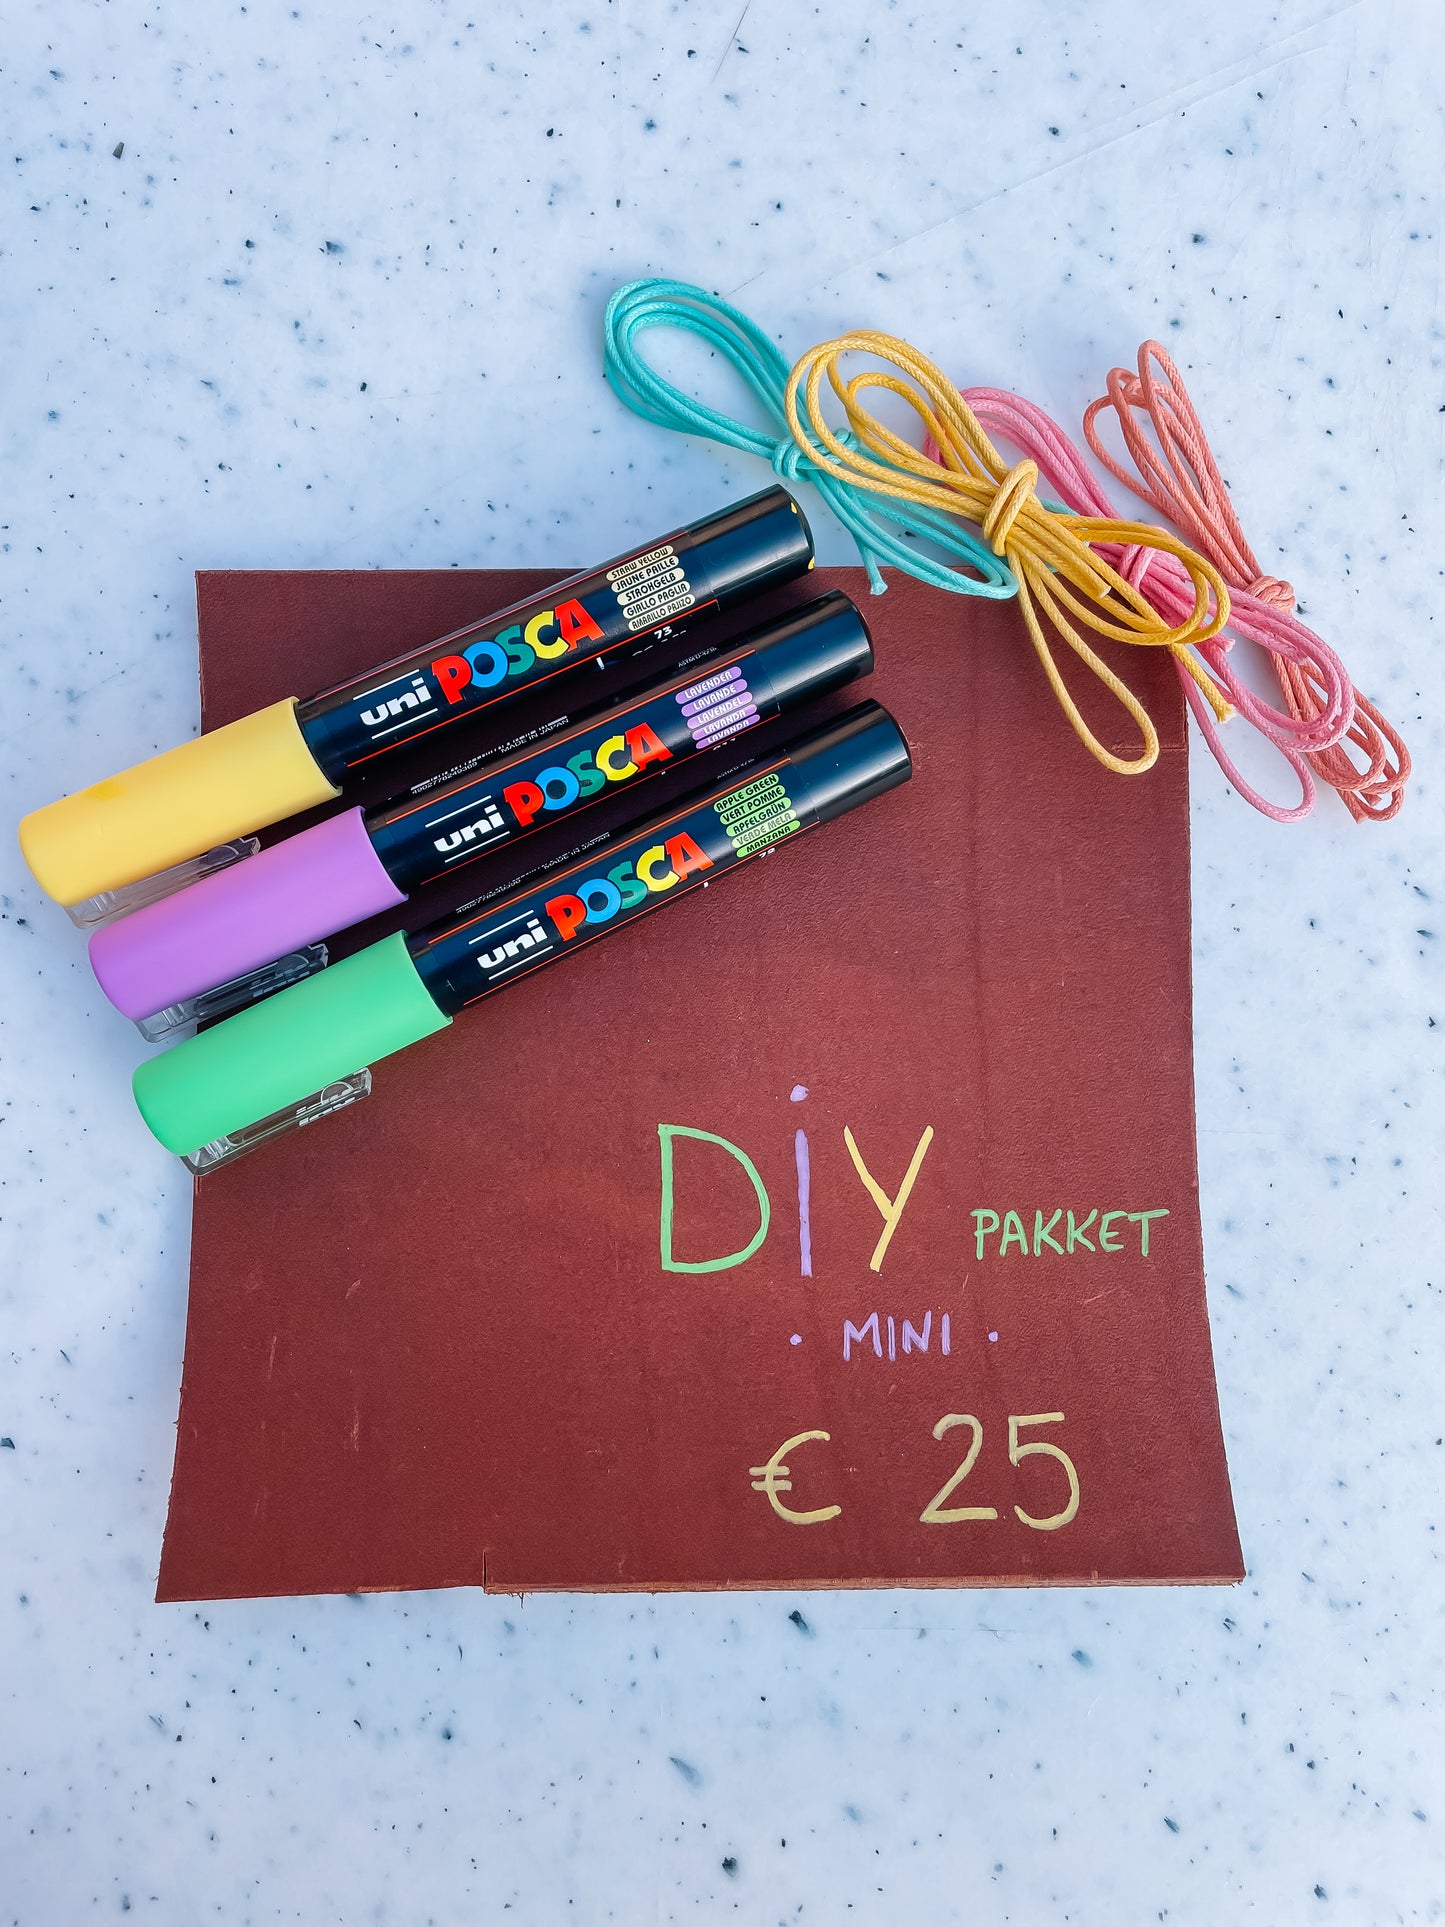 DIY pakket - Creatief met leder (mini)